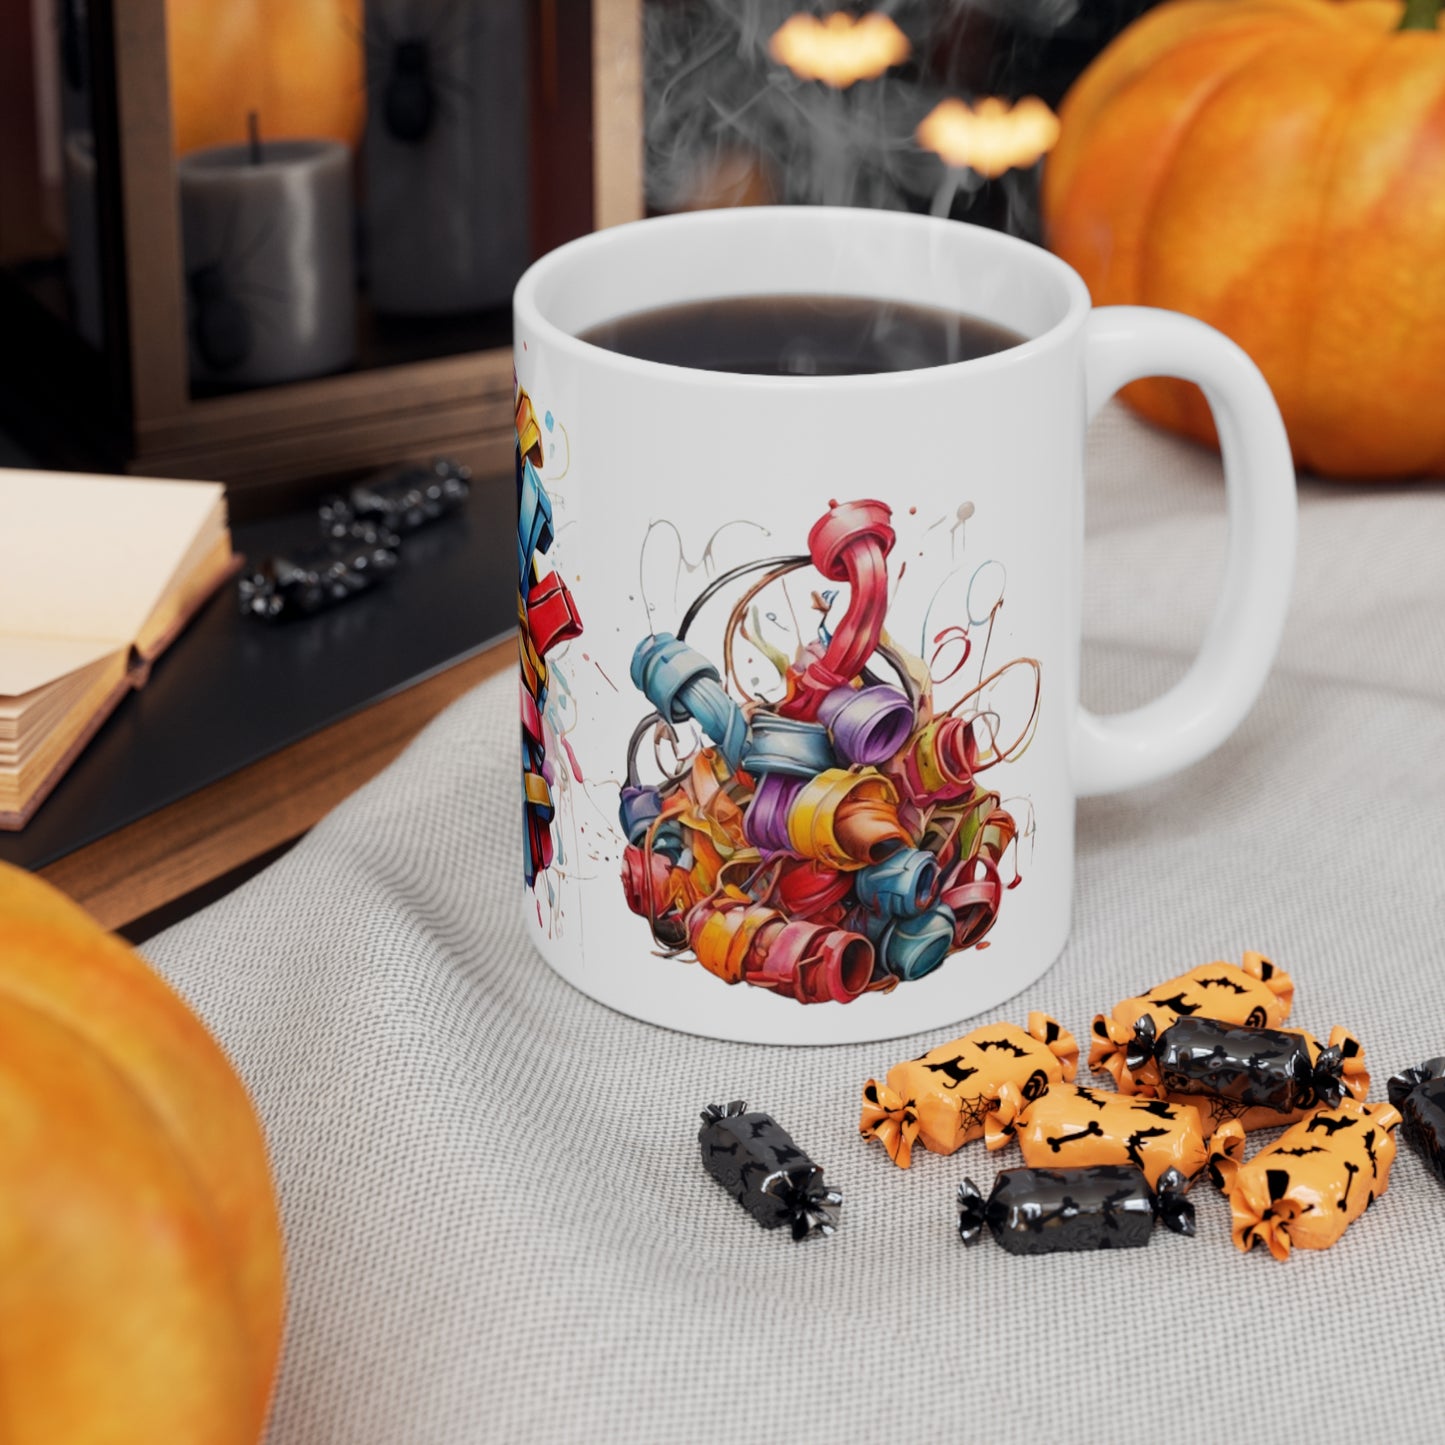 Colourful Messy Artwork Mug - Ceramic Coffee Mug 11oz